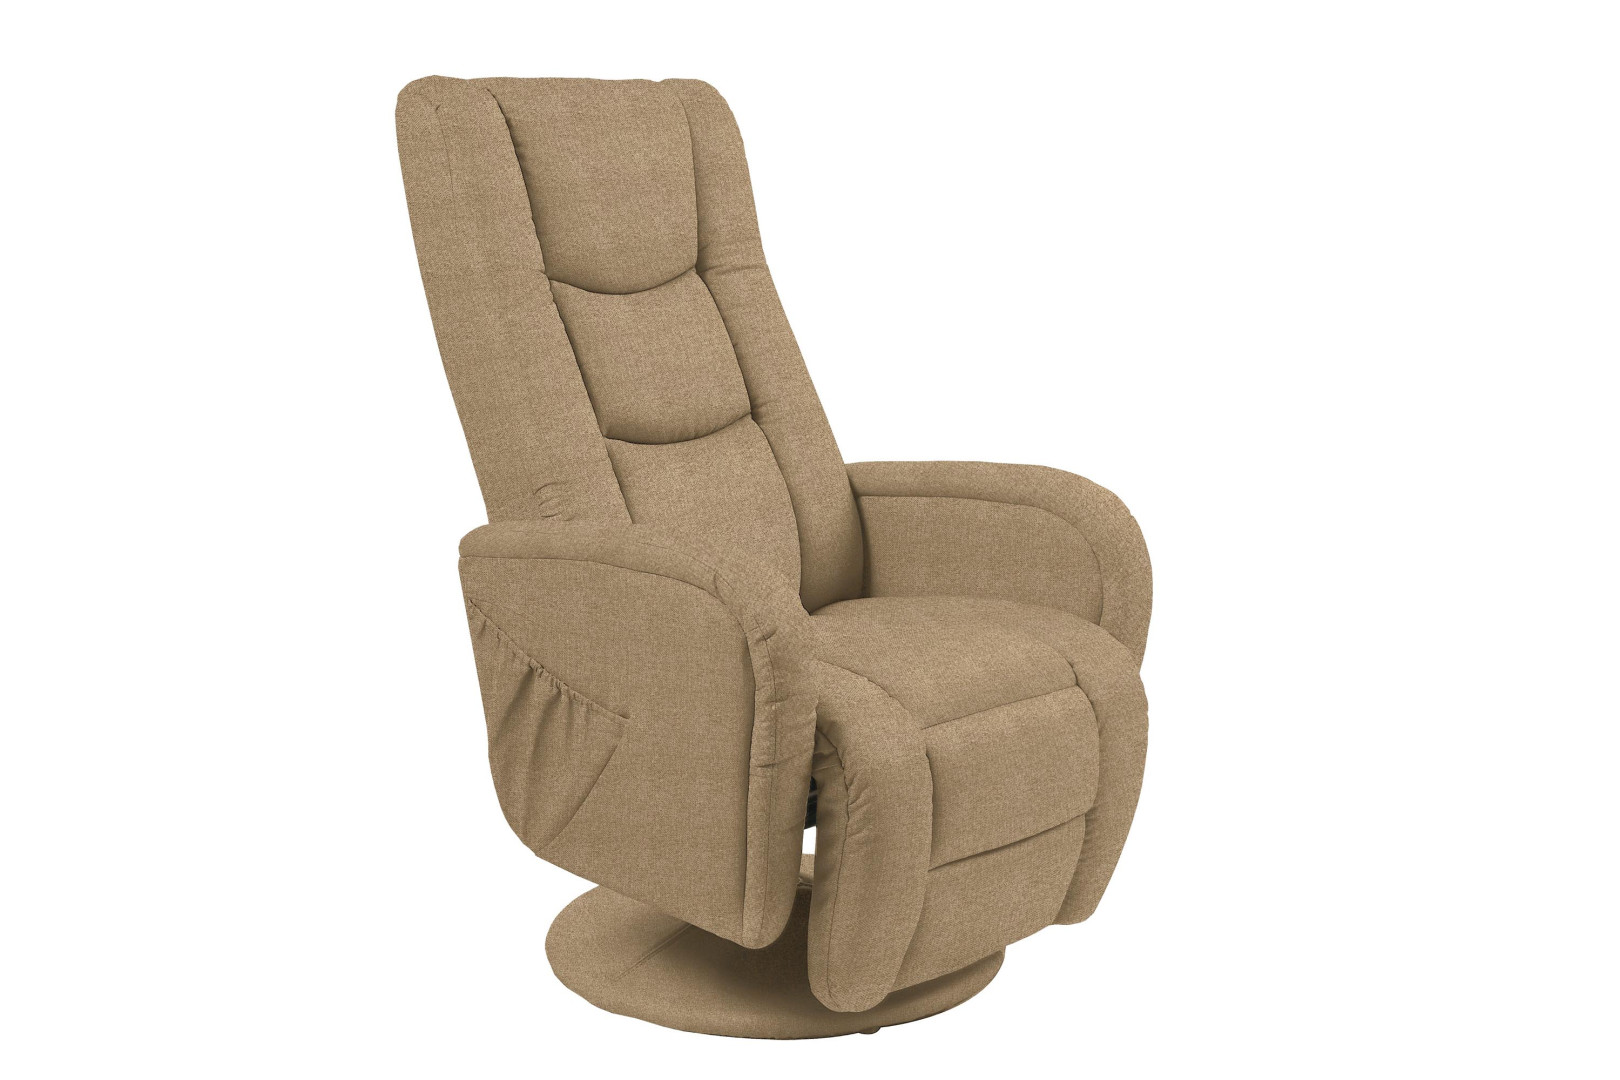 Produkt w kategorii: Fotele, nazwa produktu: Fotel Pulsar 2 - relaksu i masażu